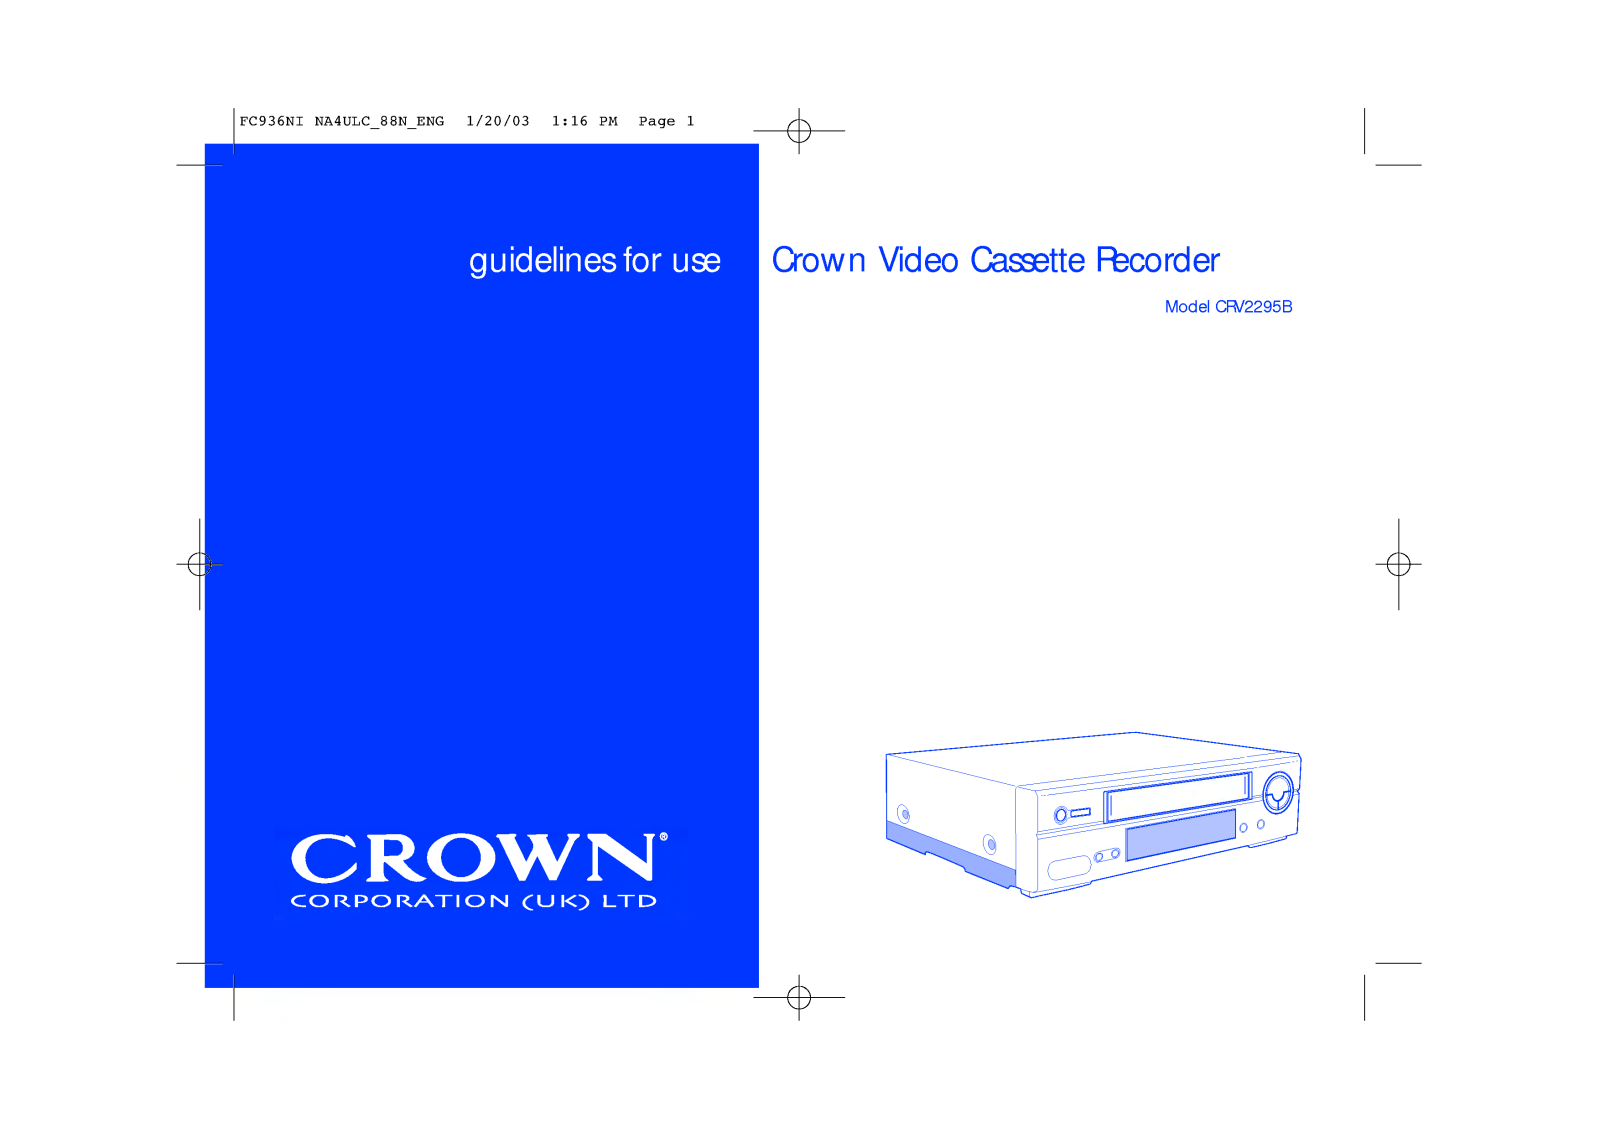 LG CRV2295B User Manual